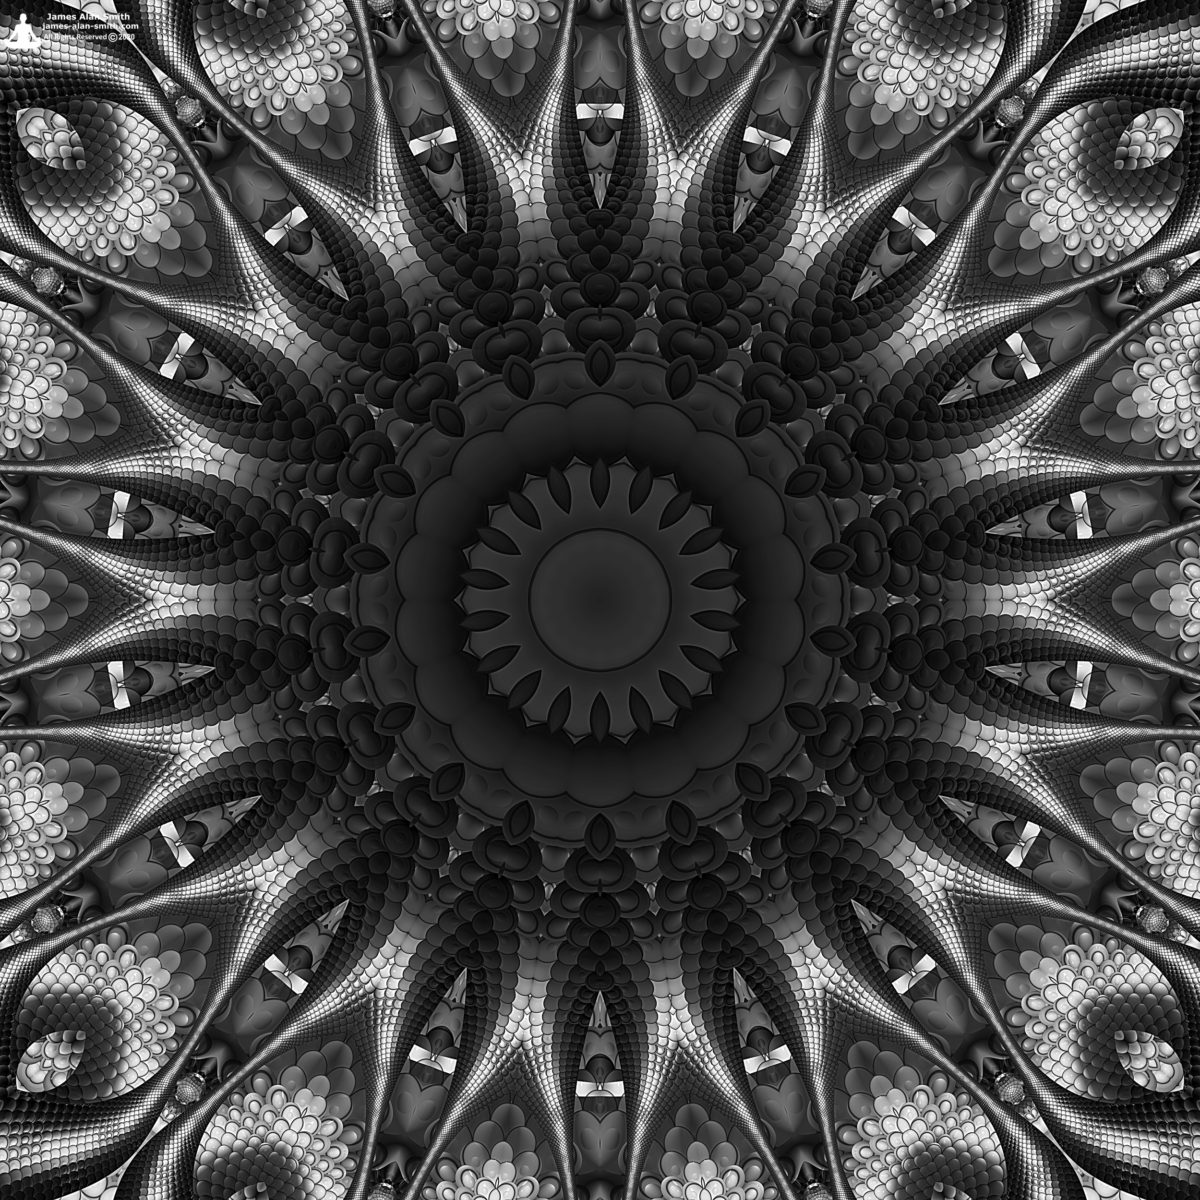 Layers of 18 Mandala: Artwork by James Alan Smith